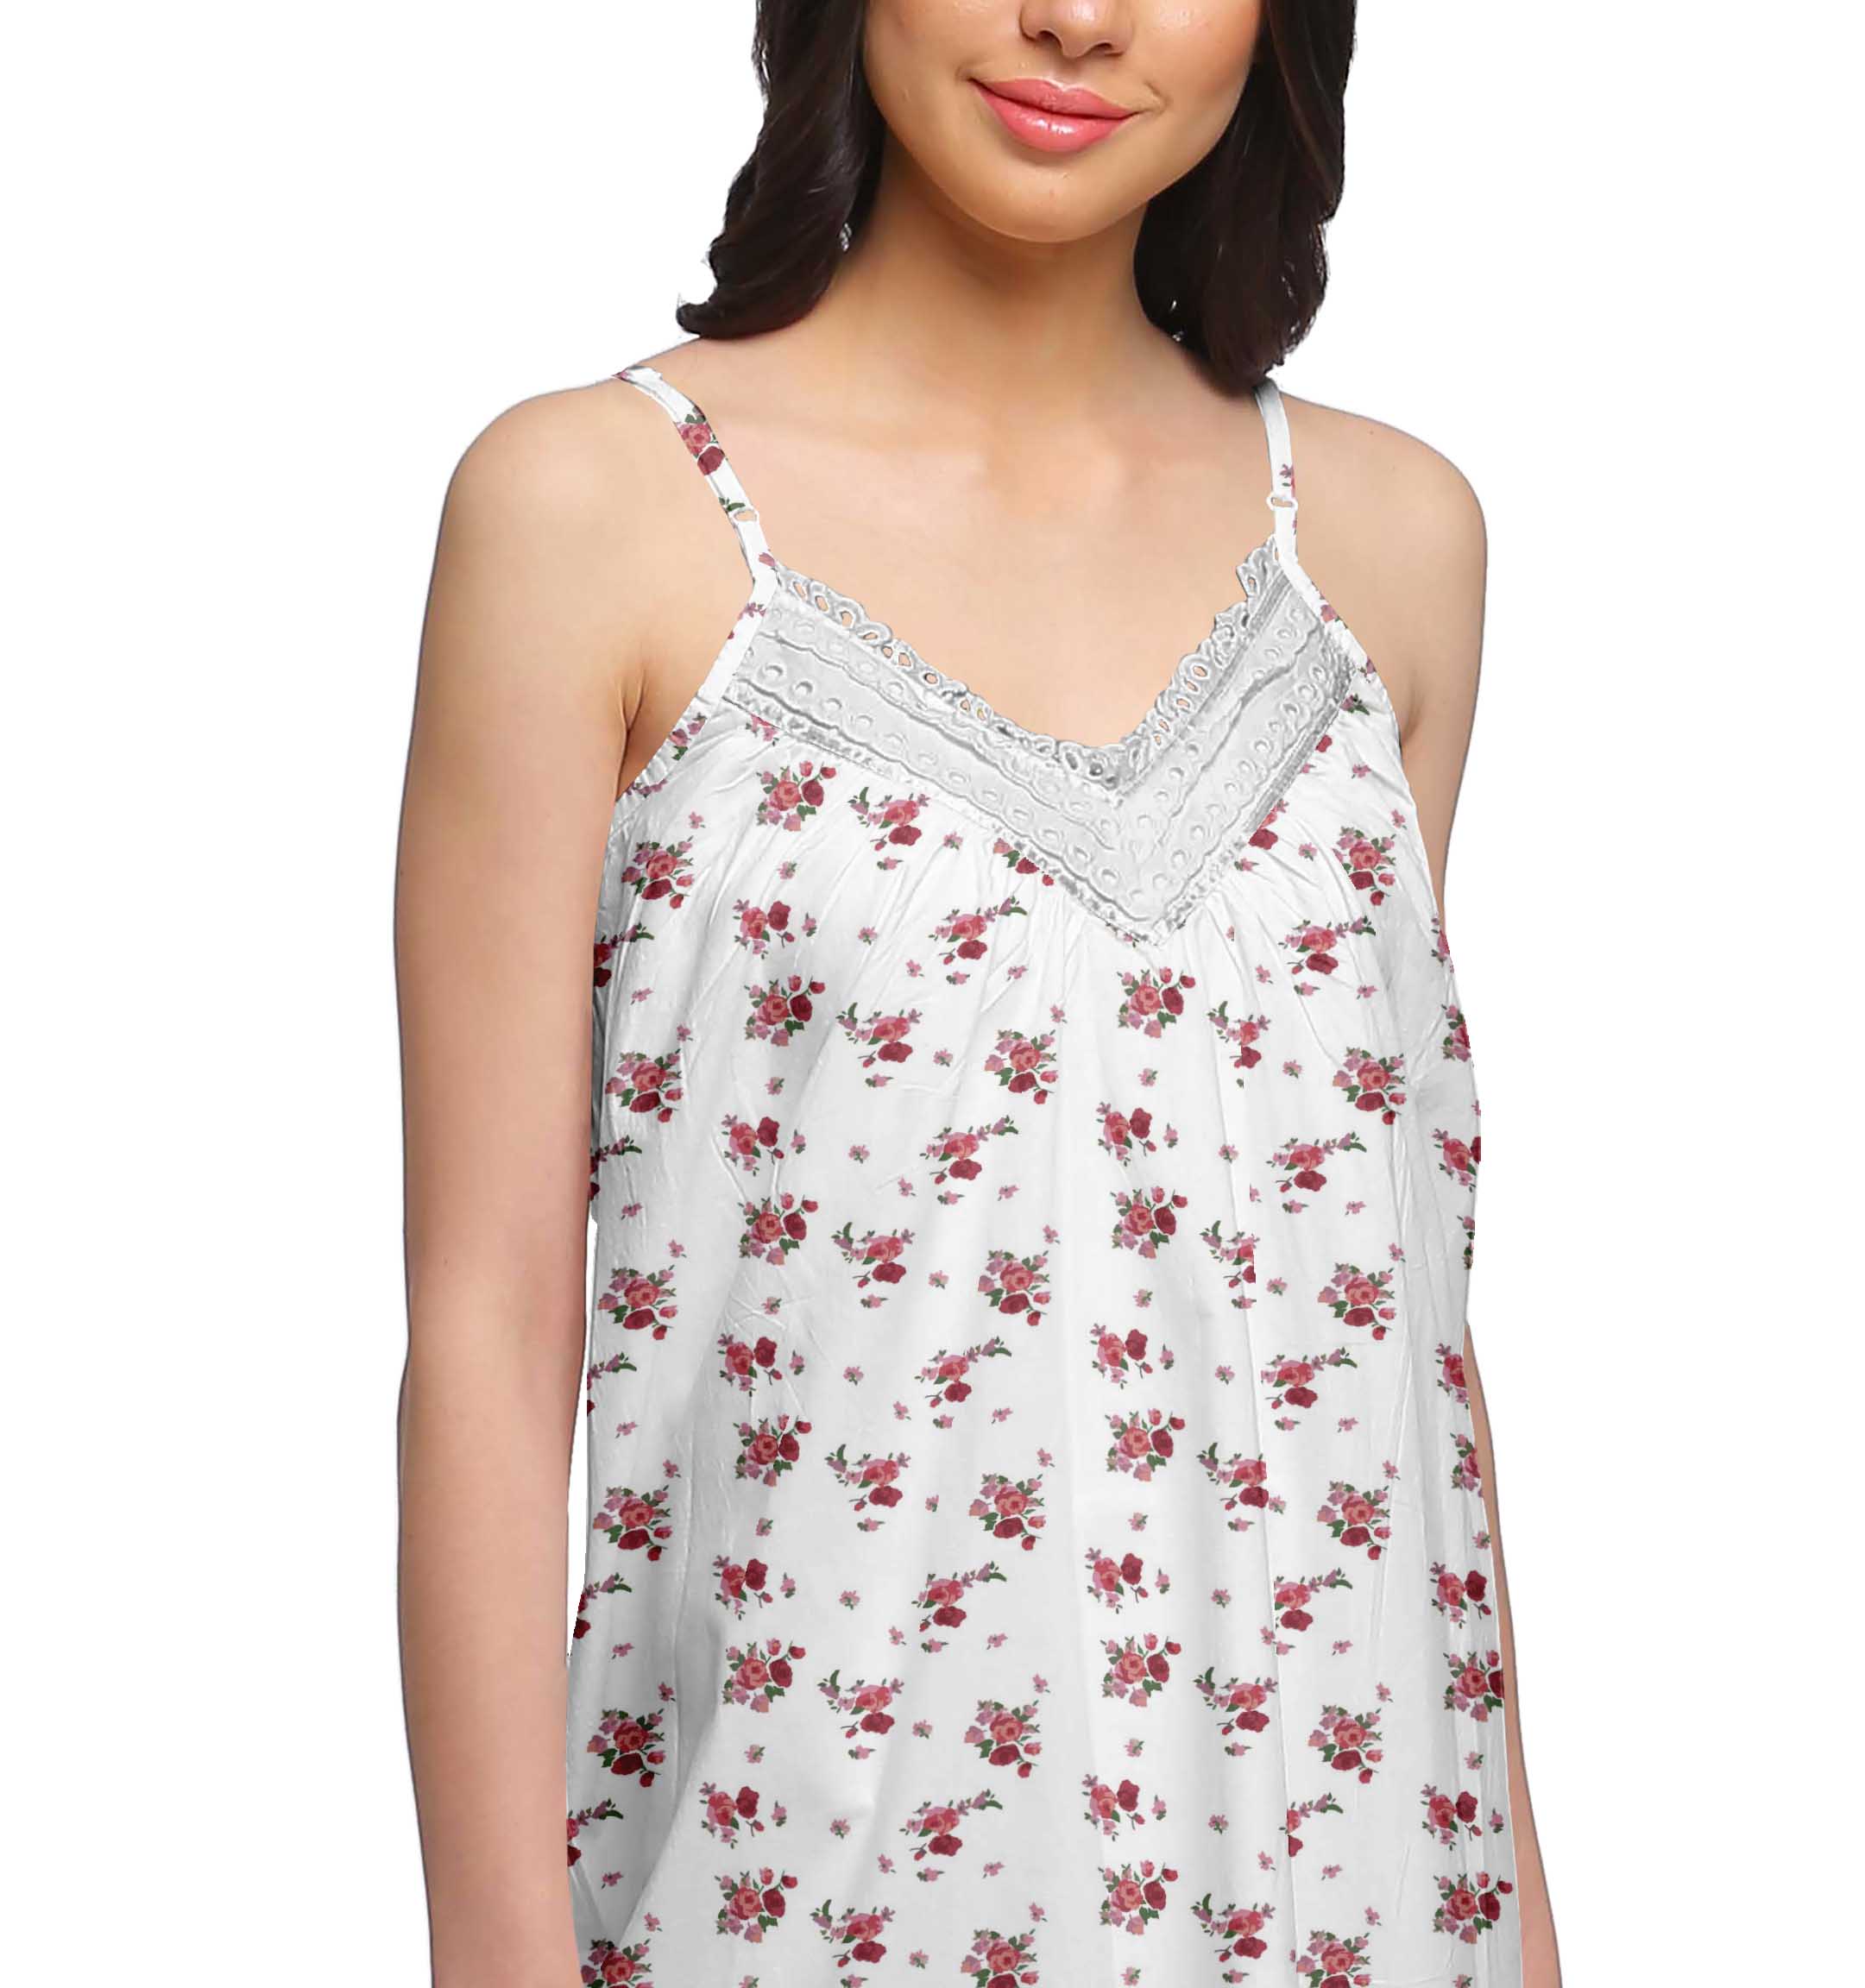 Moomaya Womens Printed Sleepwear Cotton Spaghetti Strap Nightdress Fl 110c Ebay 